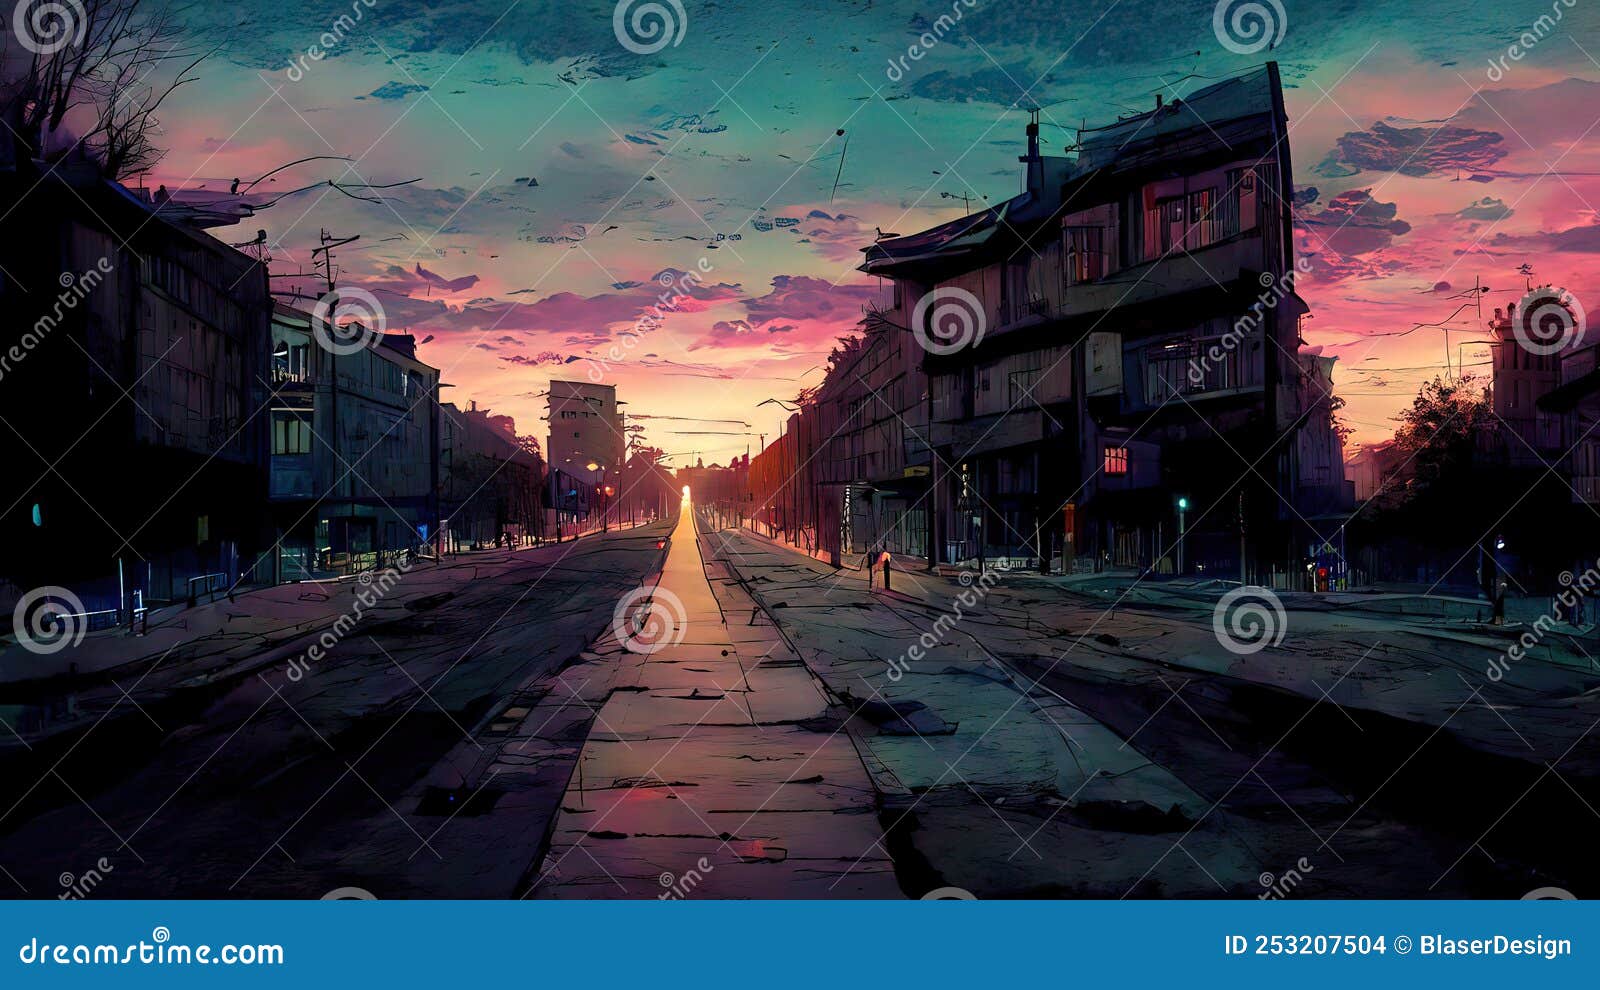 Japanese anime wallpaper  Anime scenery, Anime scenery wallpaper, Anime  artwork wallpaper